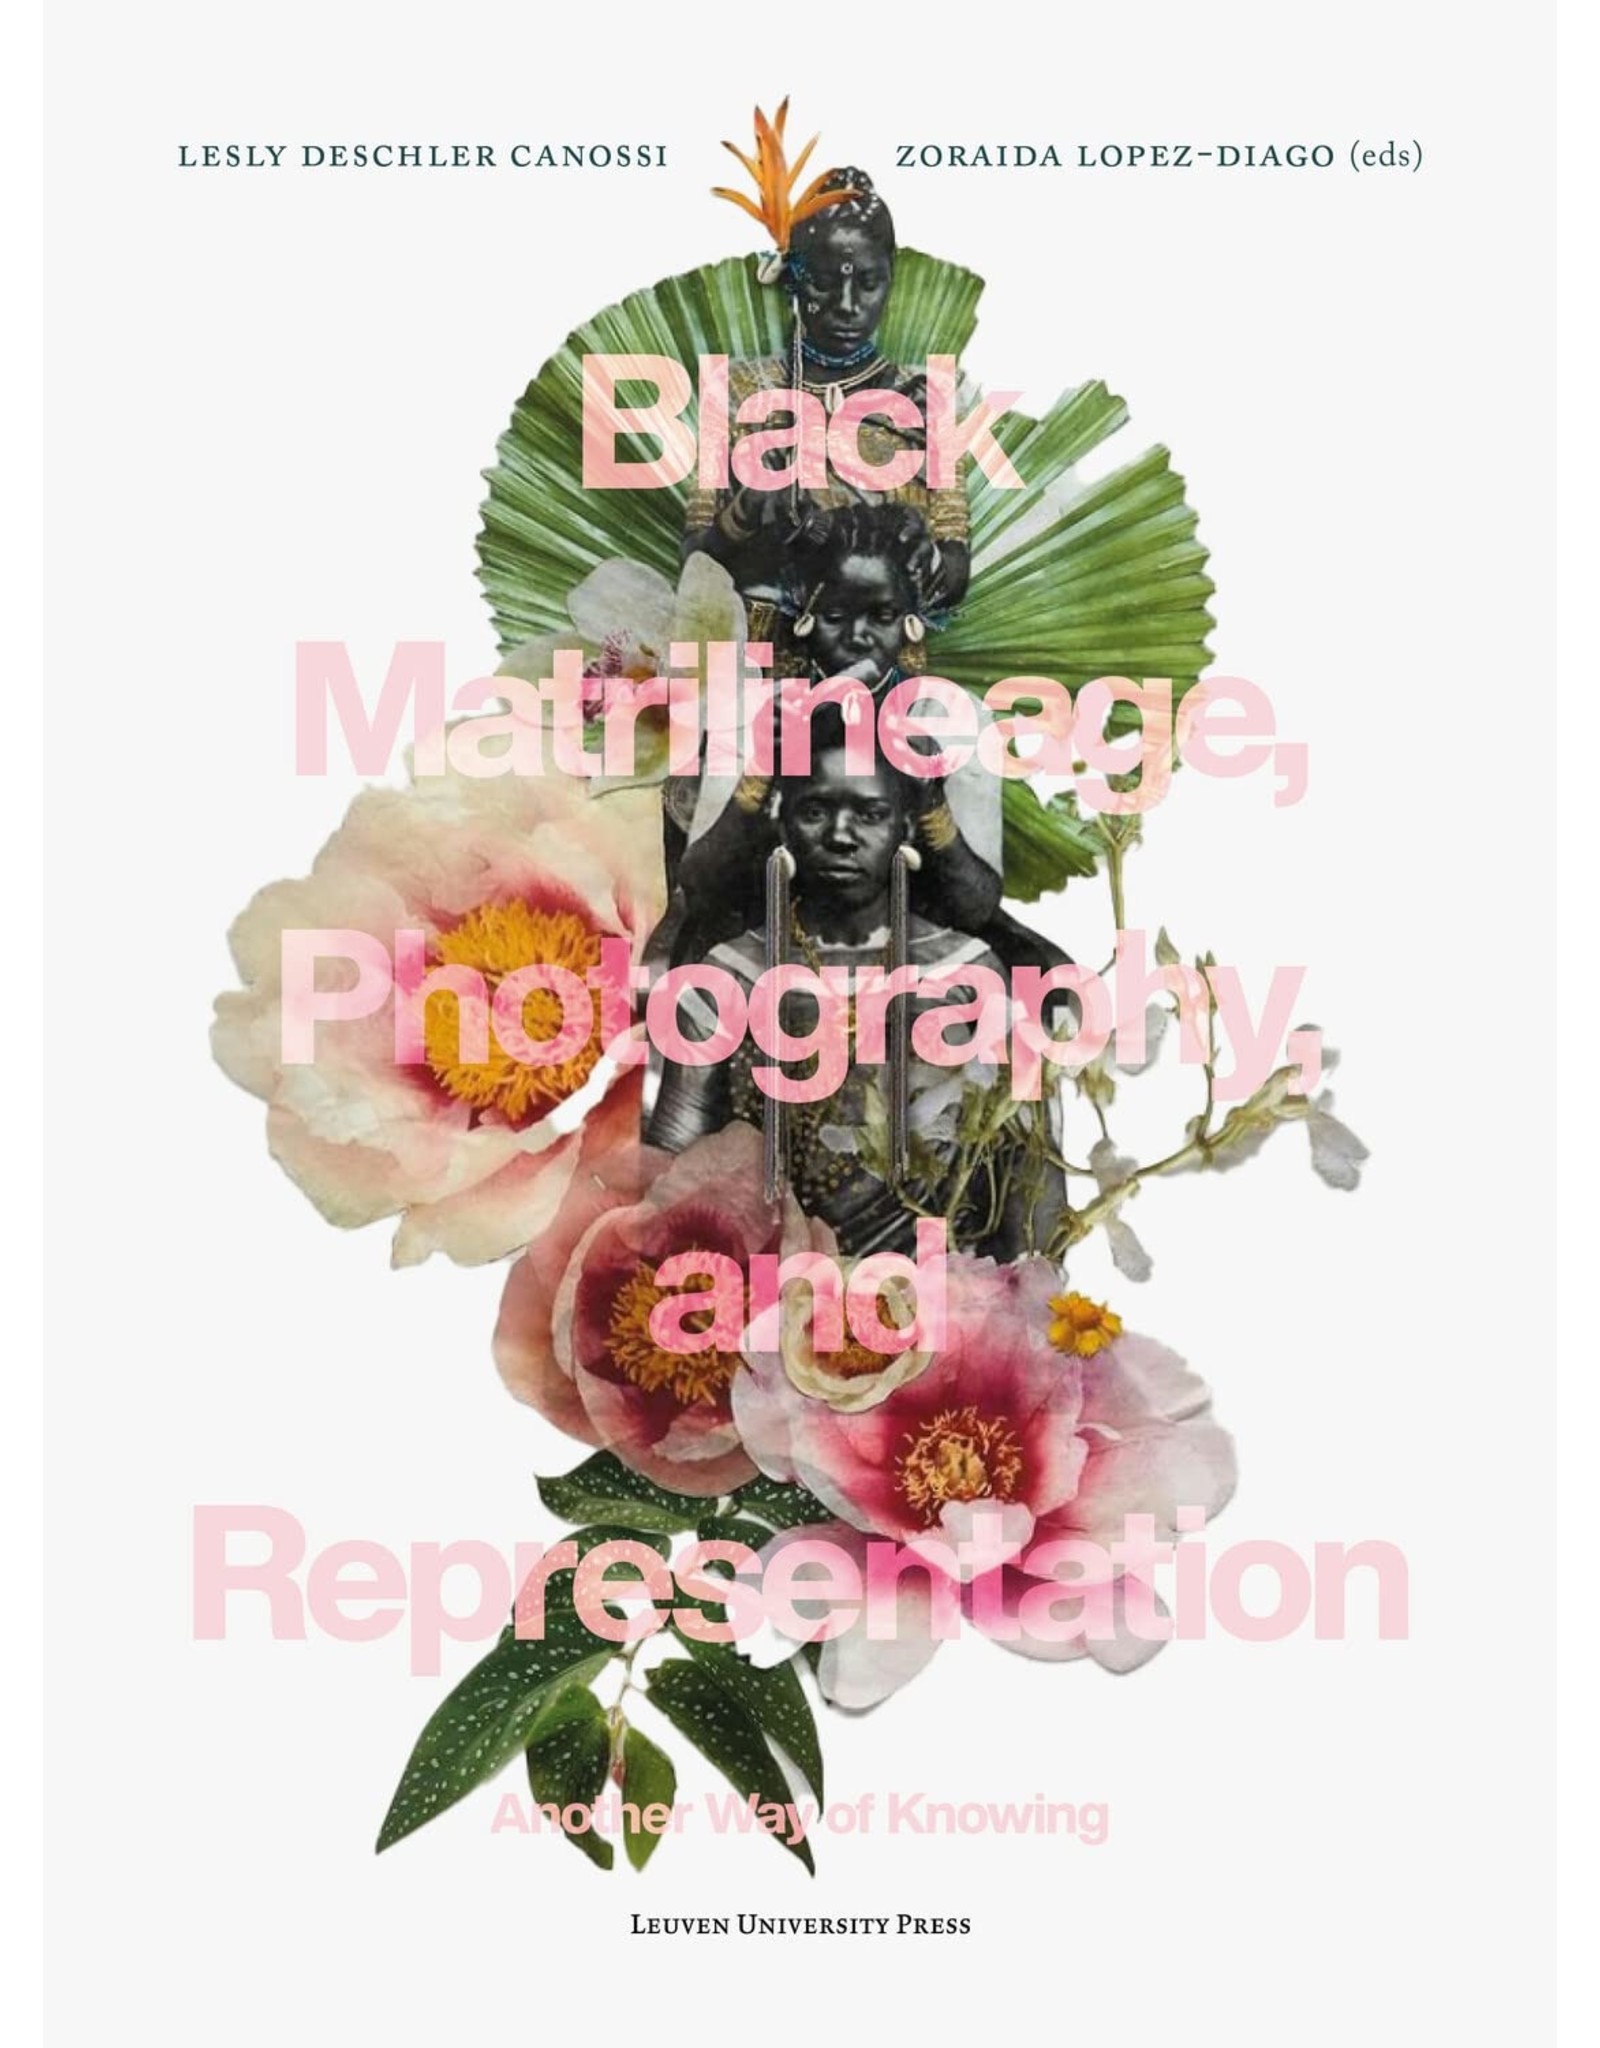 Lesly Deschler Canossi: Black Matrilineage, Photography, and Representation